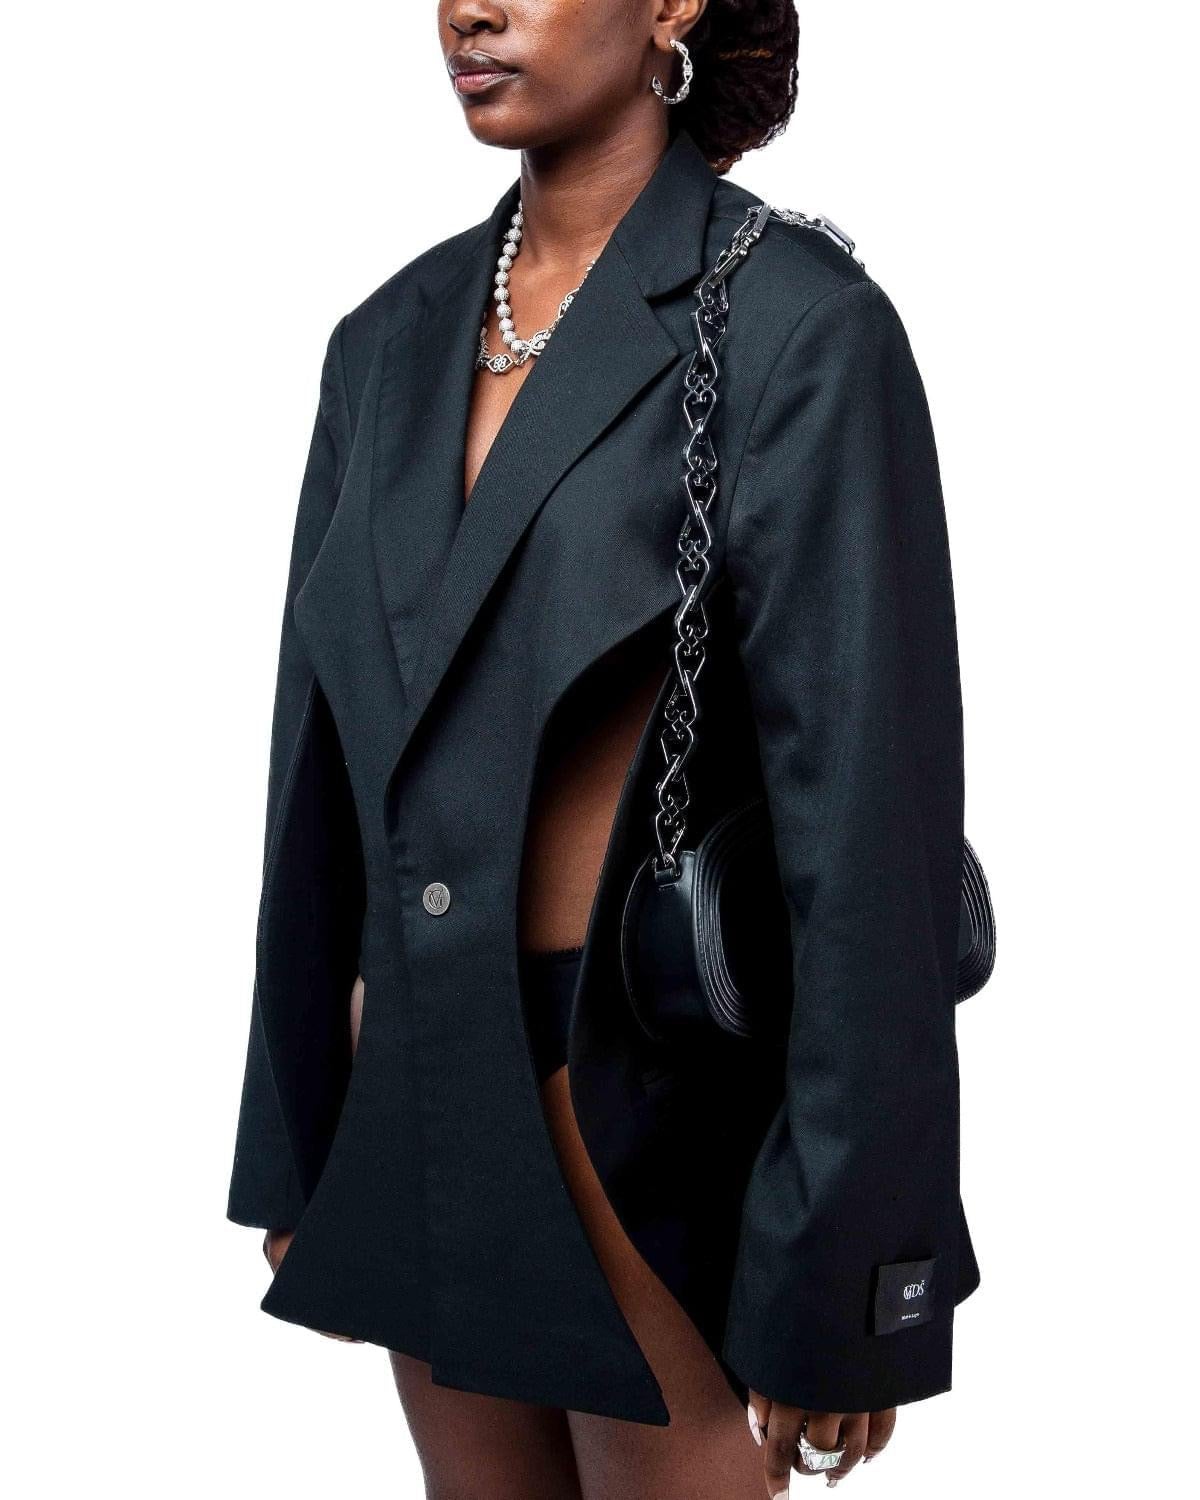 Black In Fashion Council Discovery Showroom Highlights: Nia Thomas, V. Bellan, & More